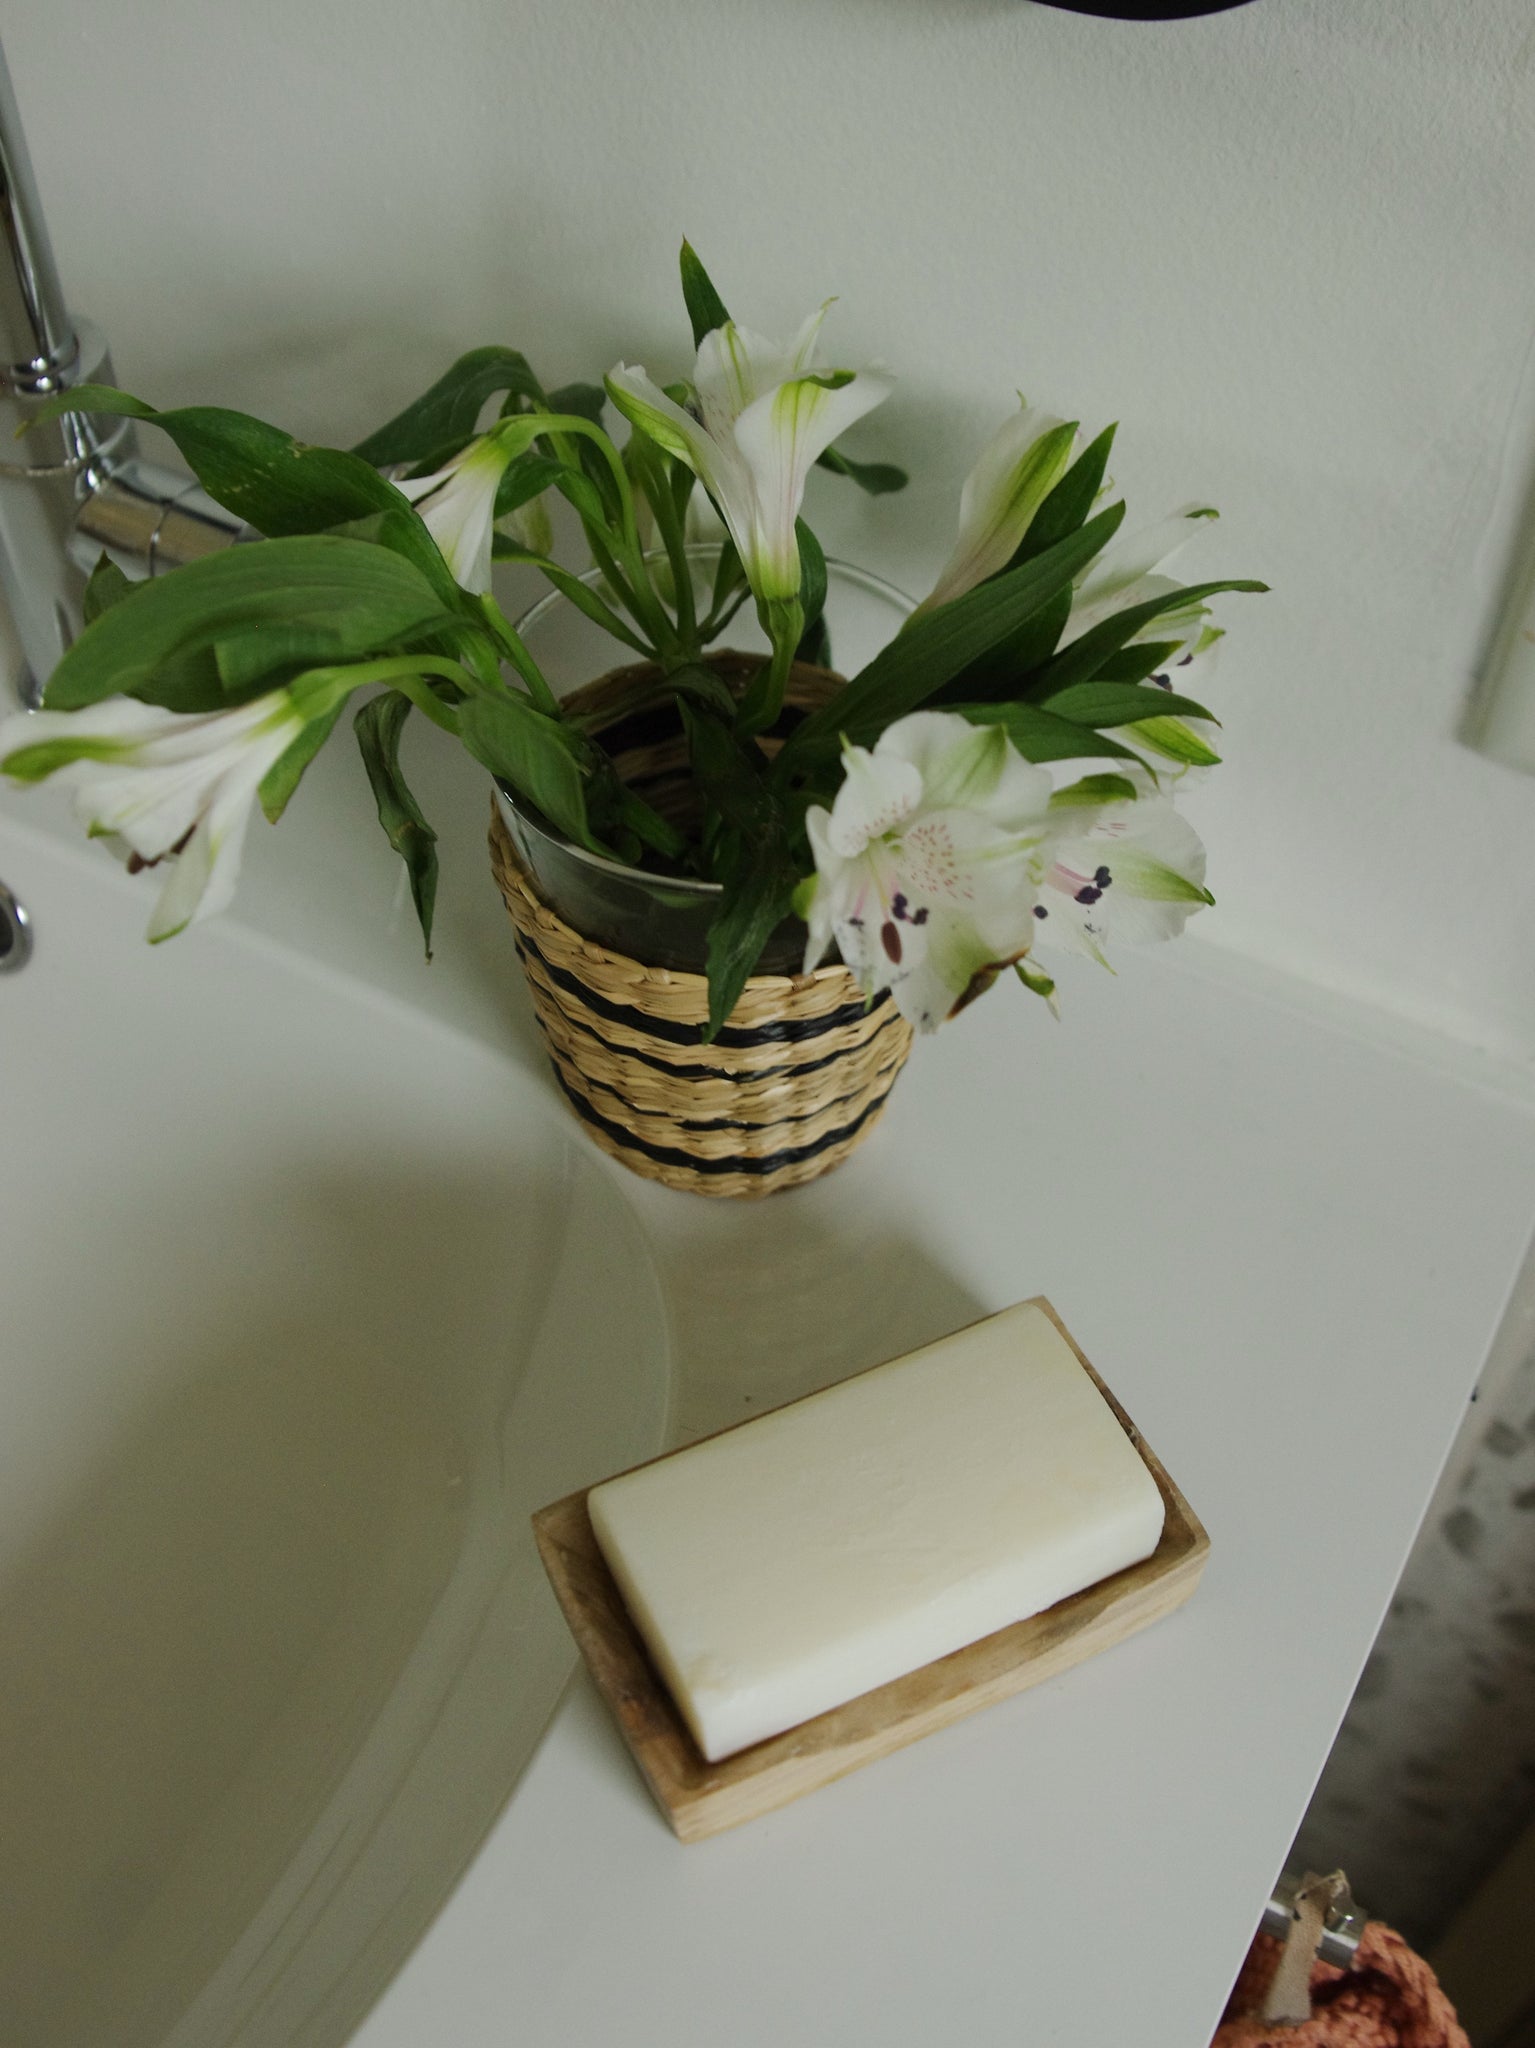 Le Bain Bathroom Accessories—Soap Dish